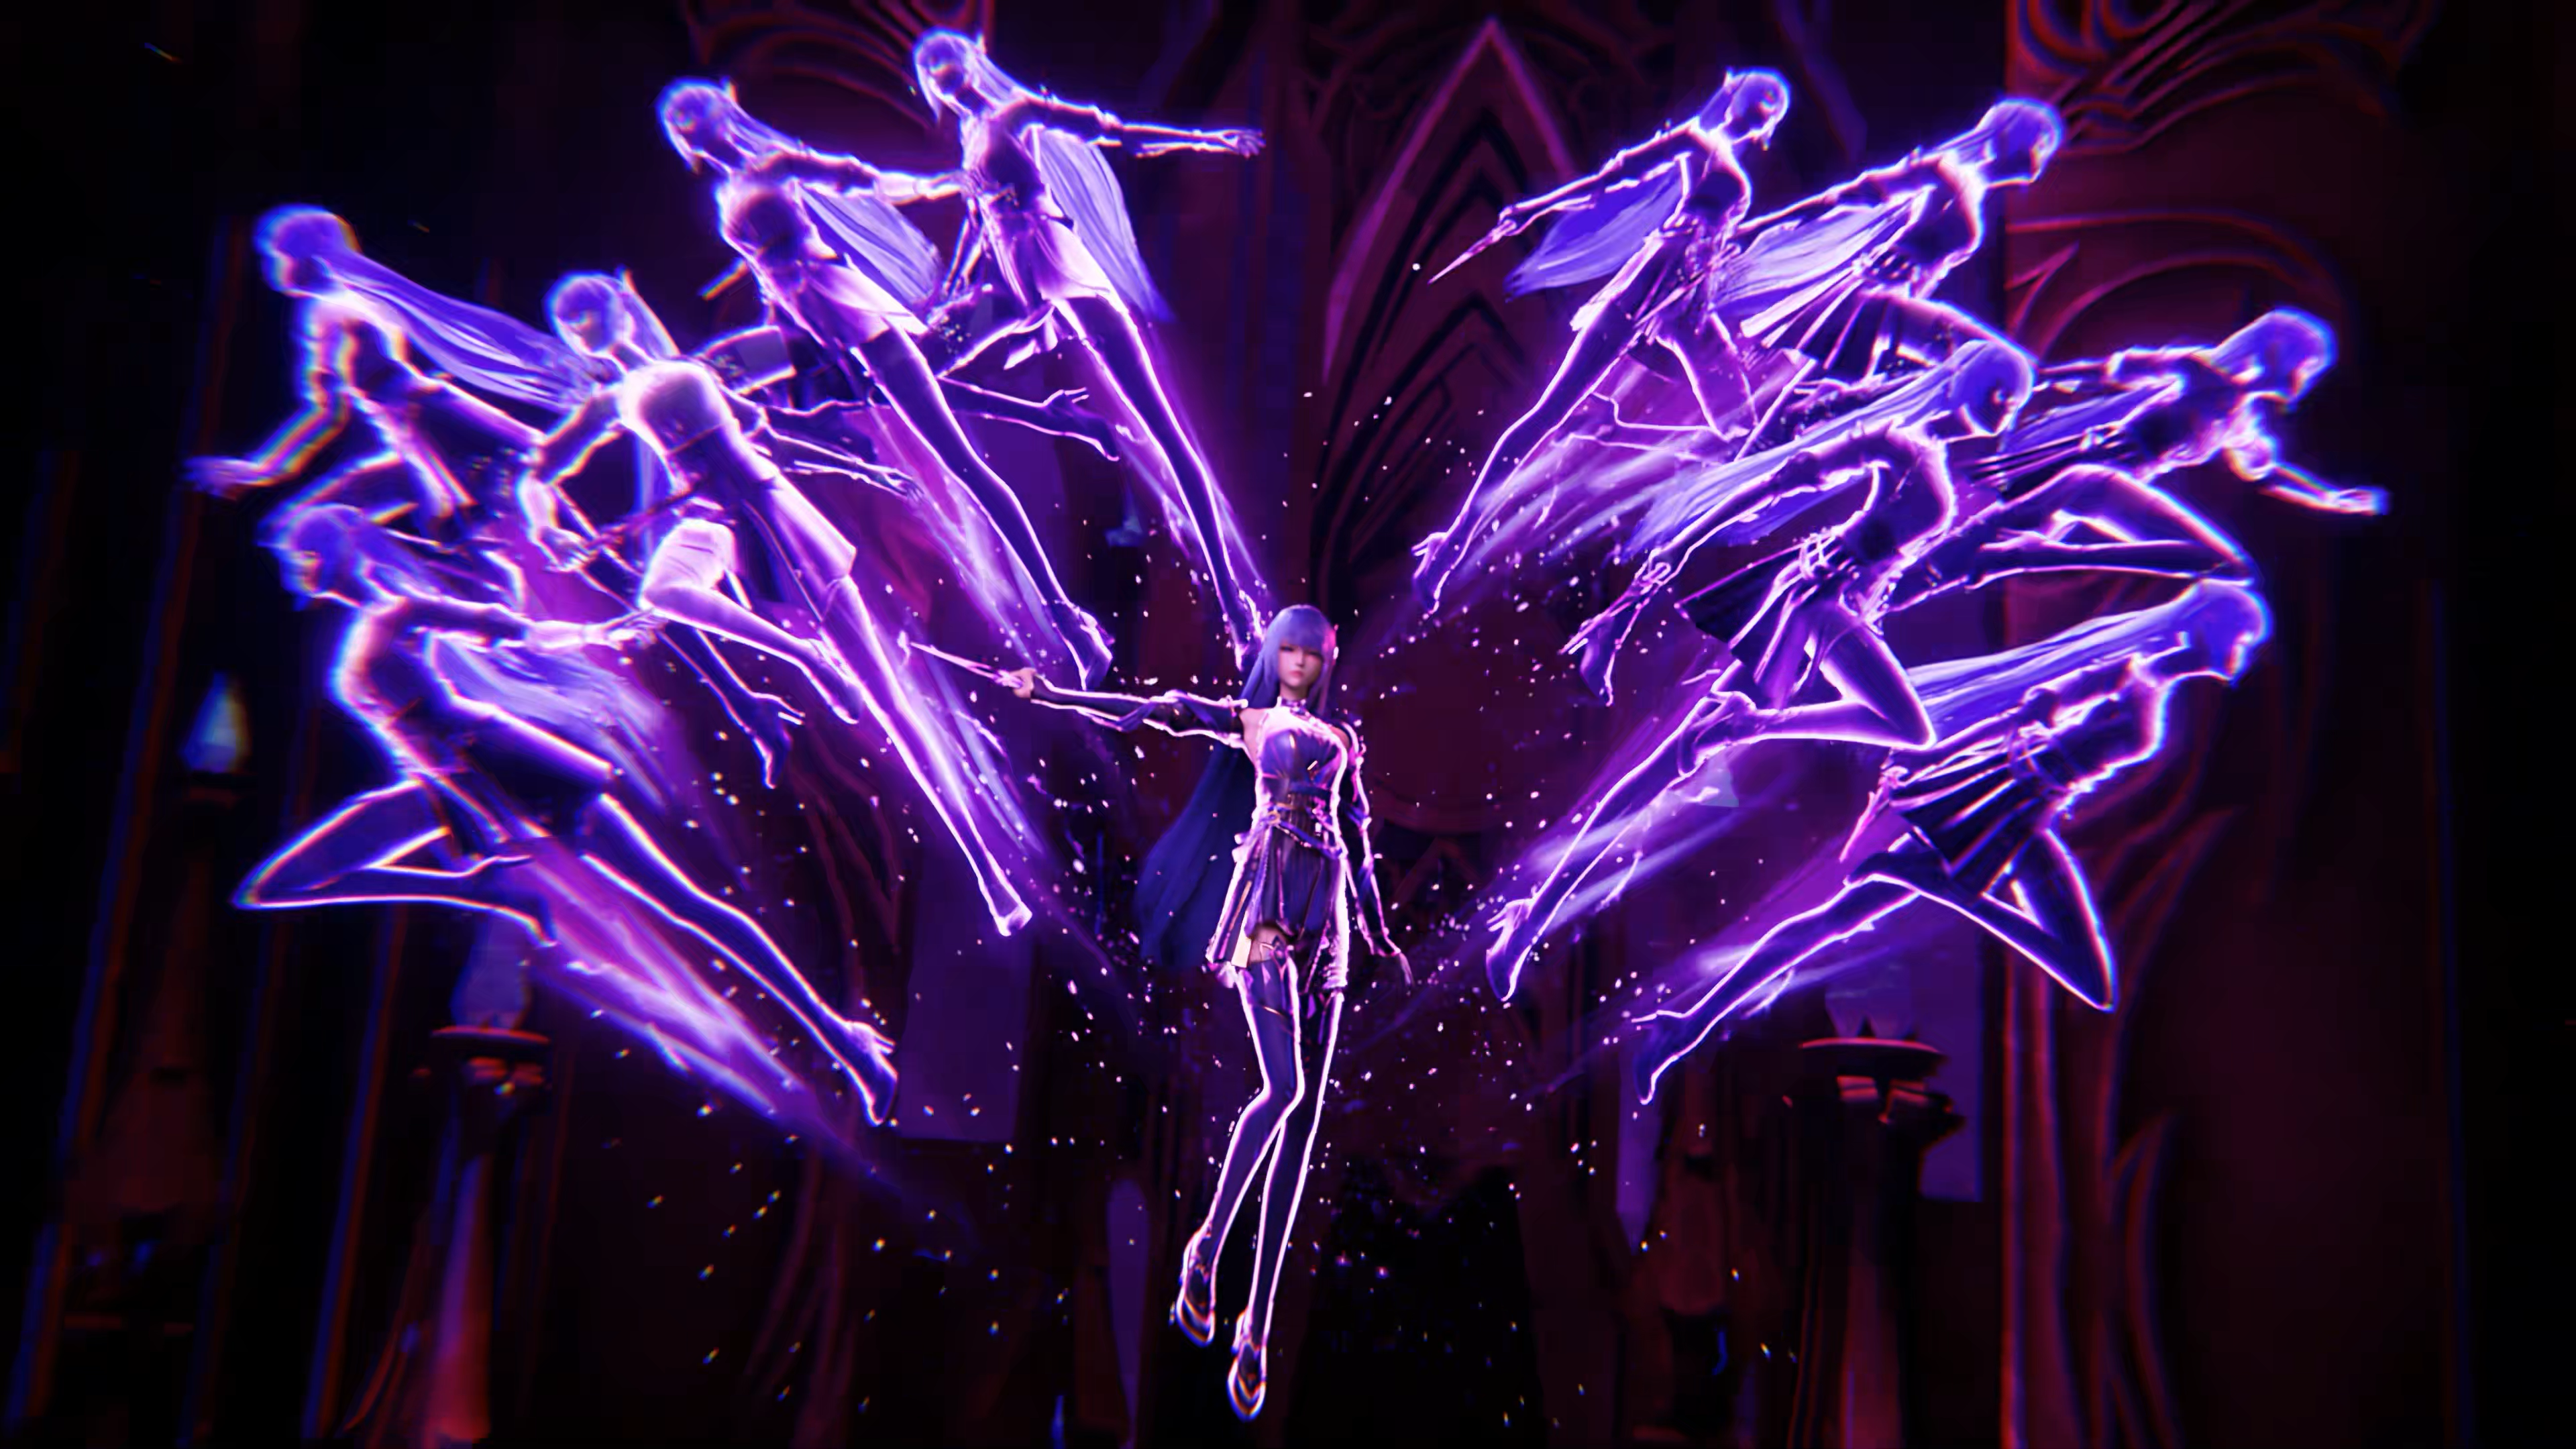 General 3840x2160 Shen Yin Wang Zuo flying team purple clothing purple eyes purple hair dark background women fantasy art fantasy girl CGI floating heels sword women with swords long hair